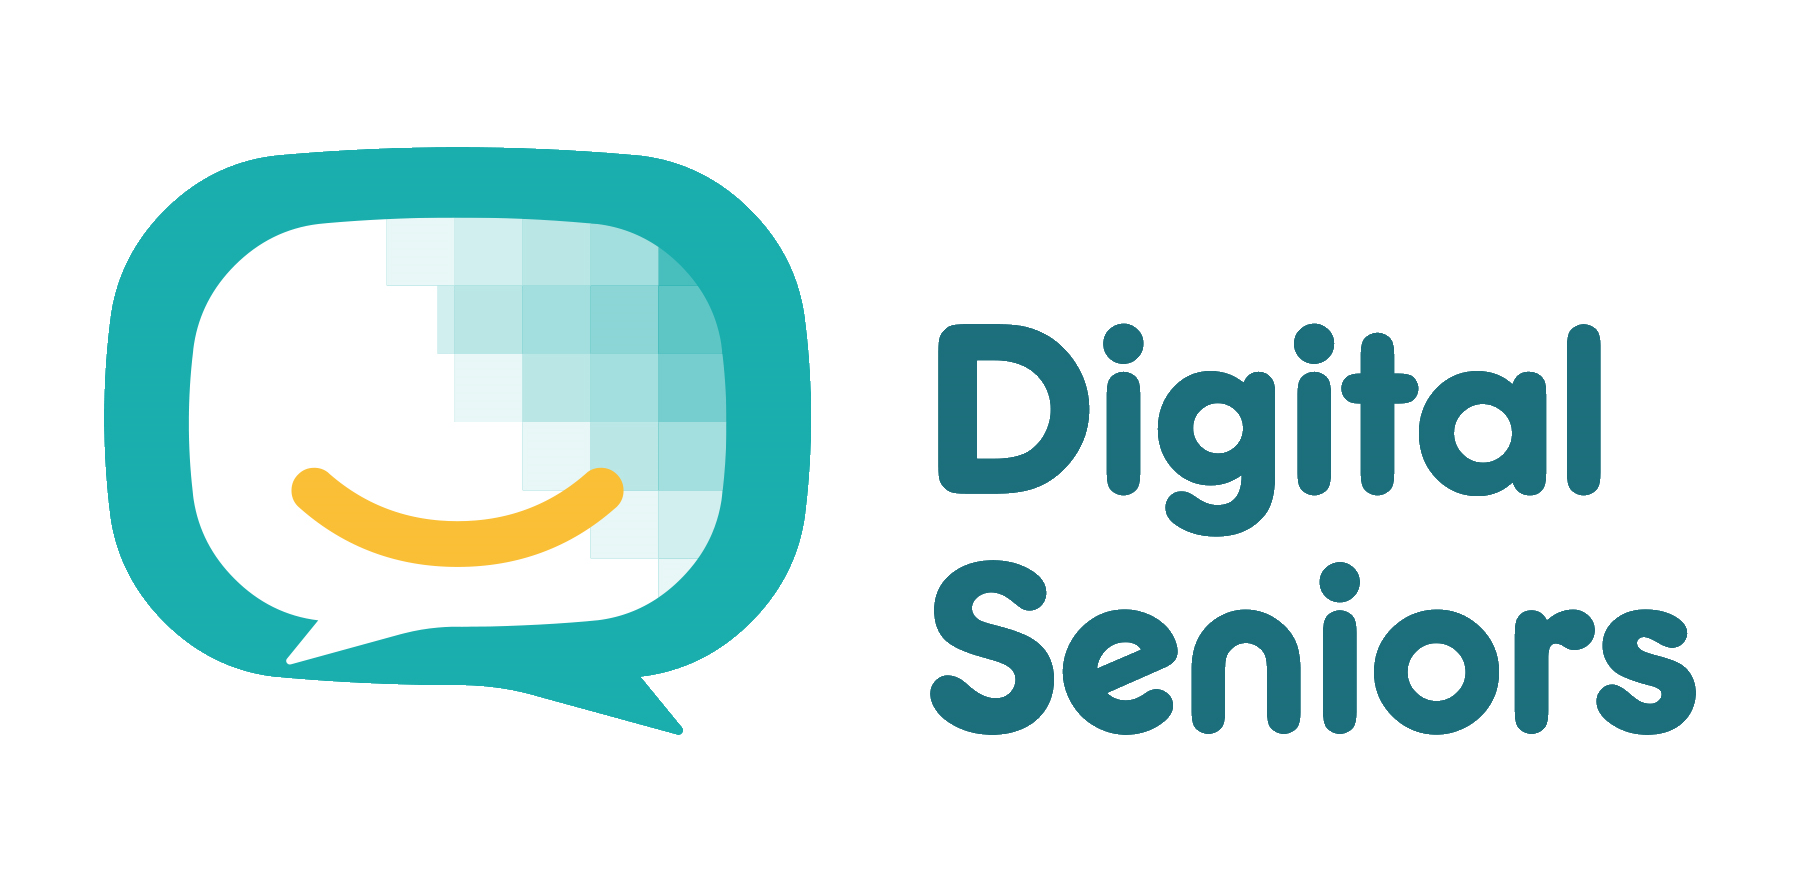 Supporting Digital Seniors